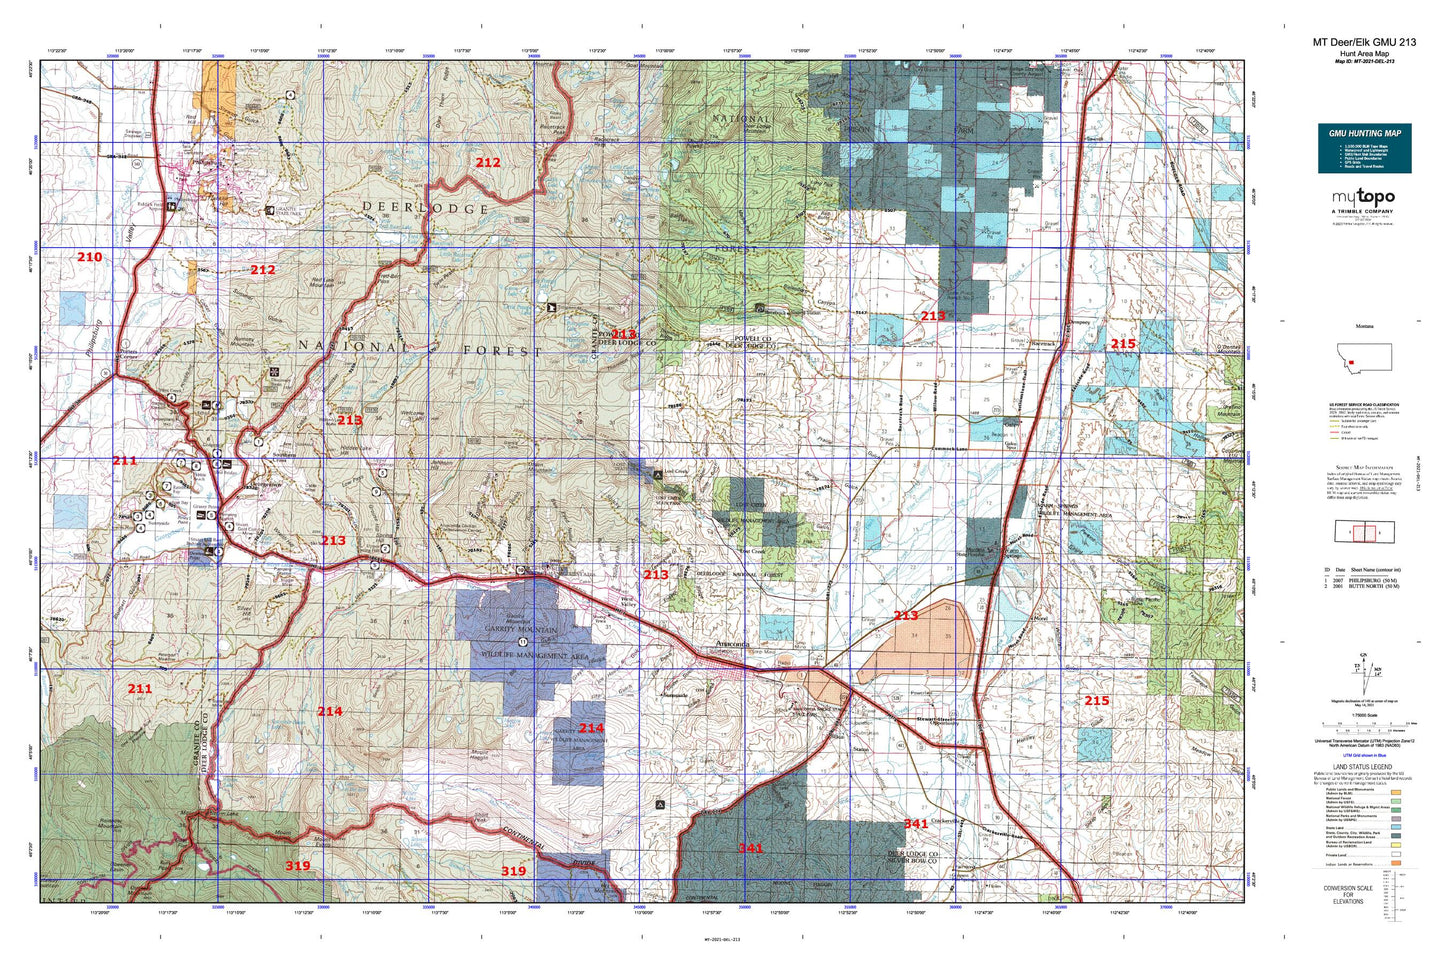 Montana Deer/Elk GMU 213 Map Image